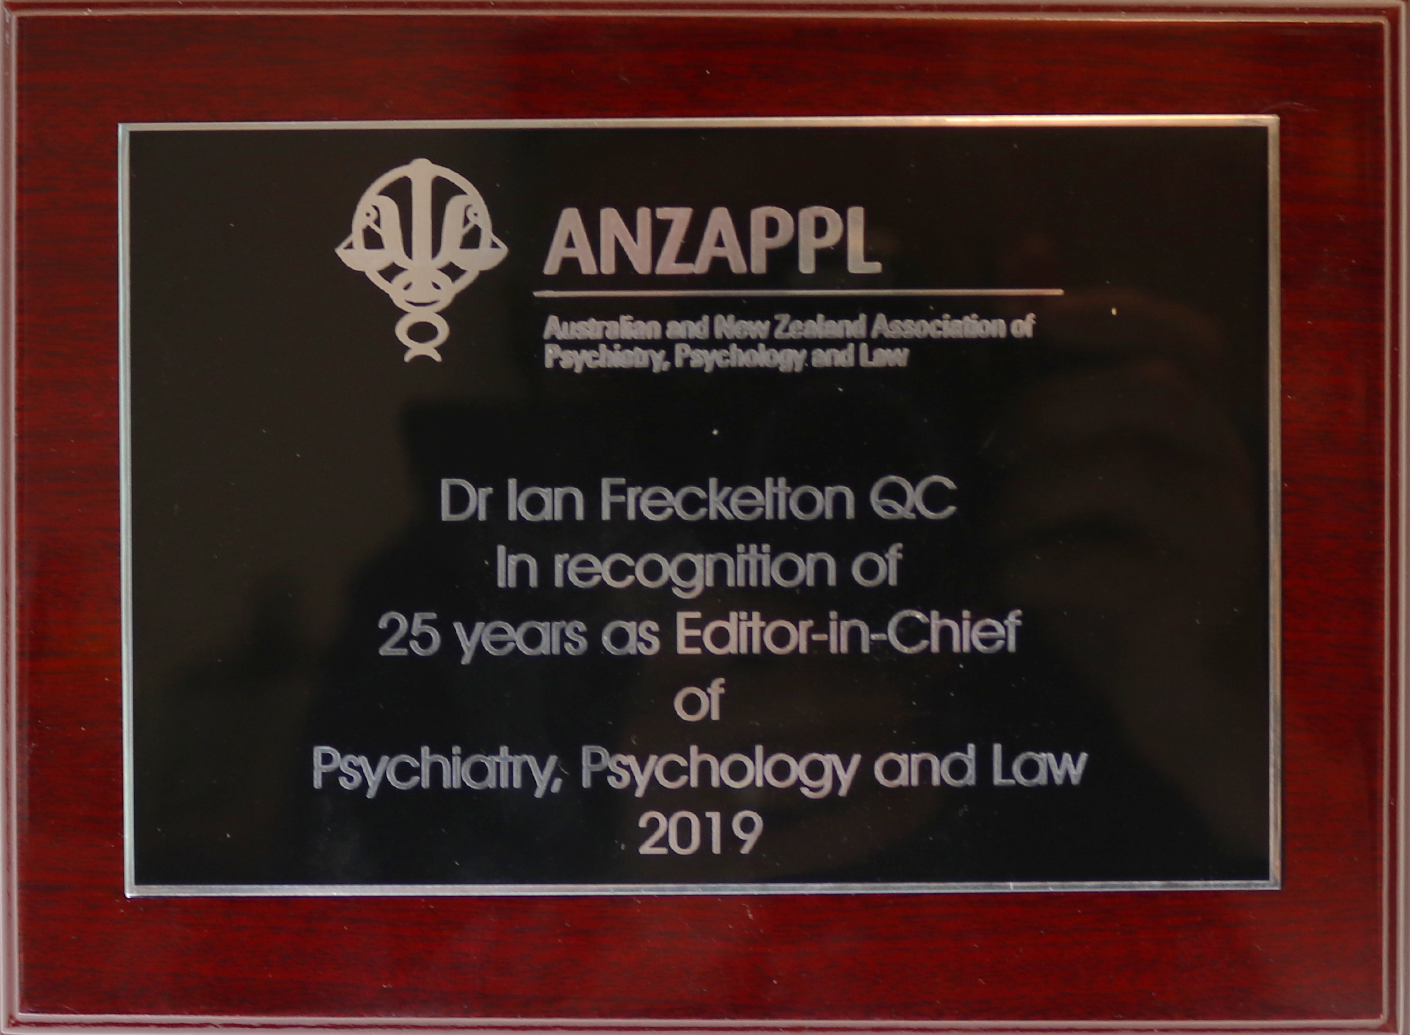 https://ianfreckelton.com.au/wp-content/uploads/2023/04/IanFreckleton_Award14.png